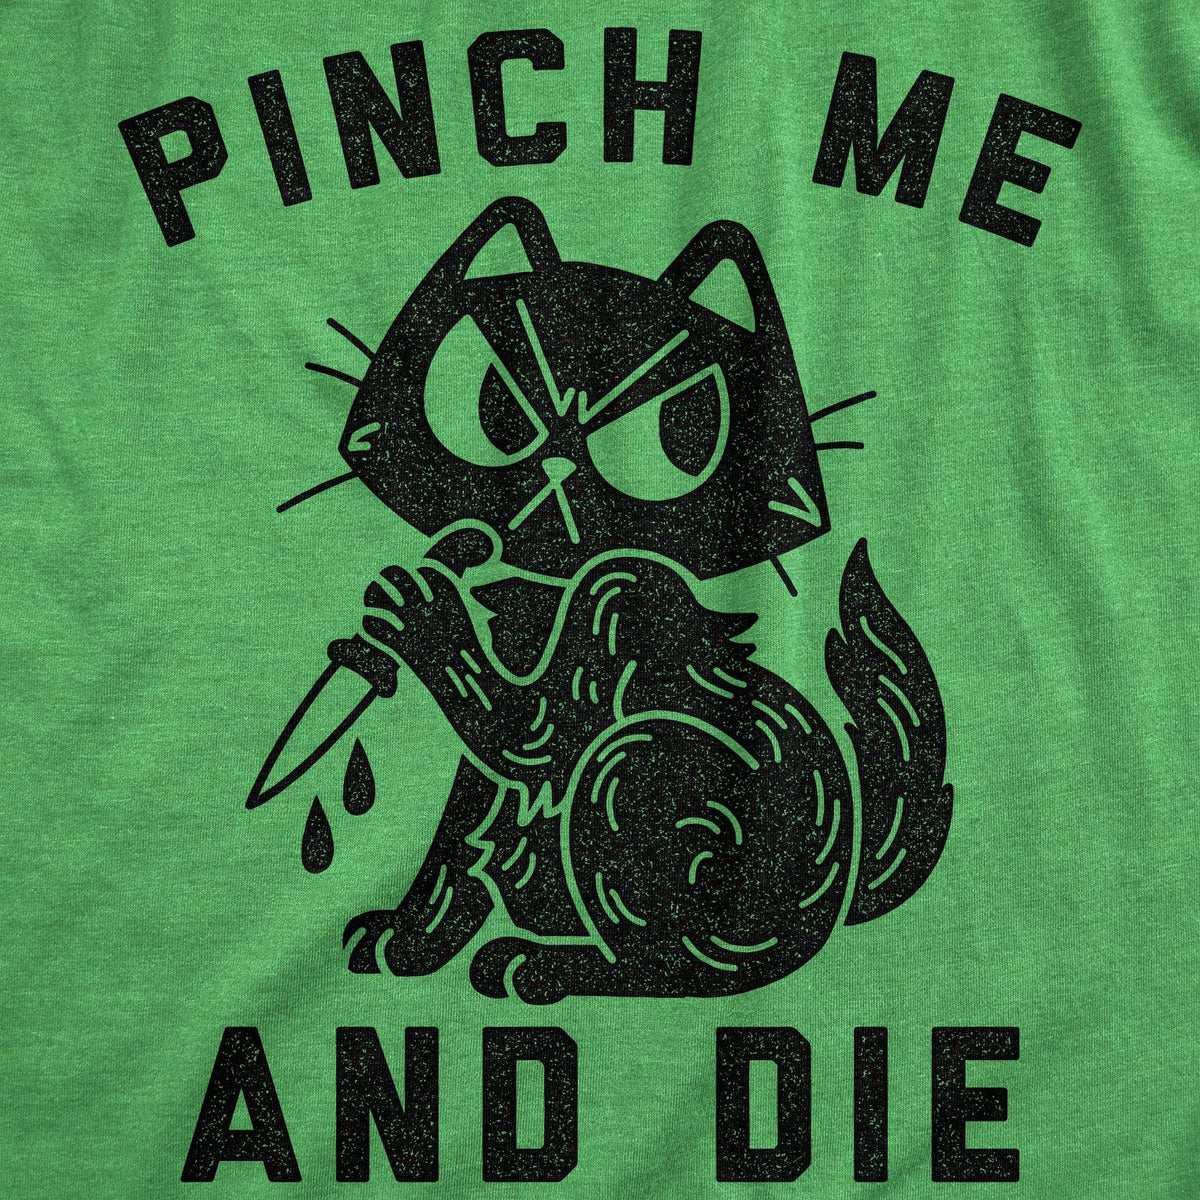 Pinch Me And Die Women&#39;s Tshirt  -  Crazy Dog T-Shirts